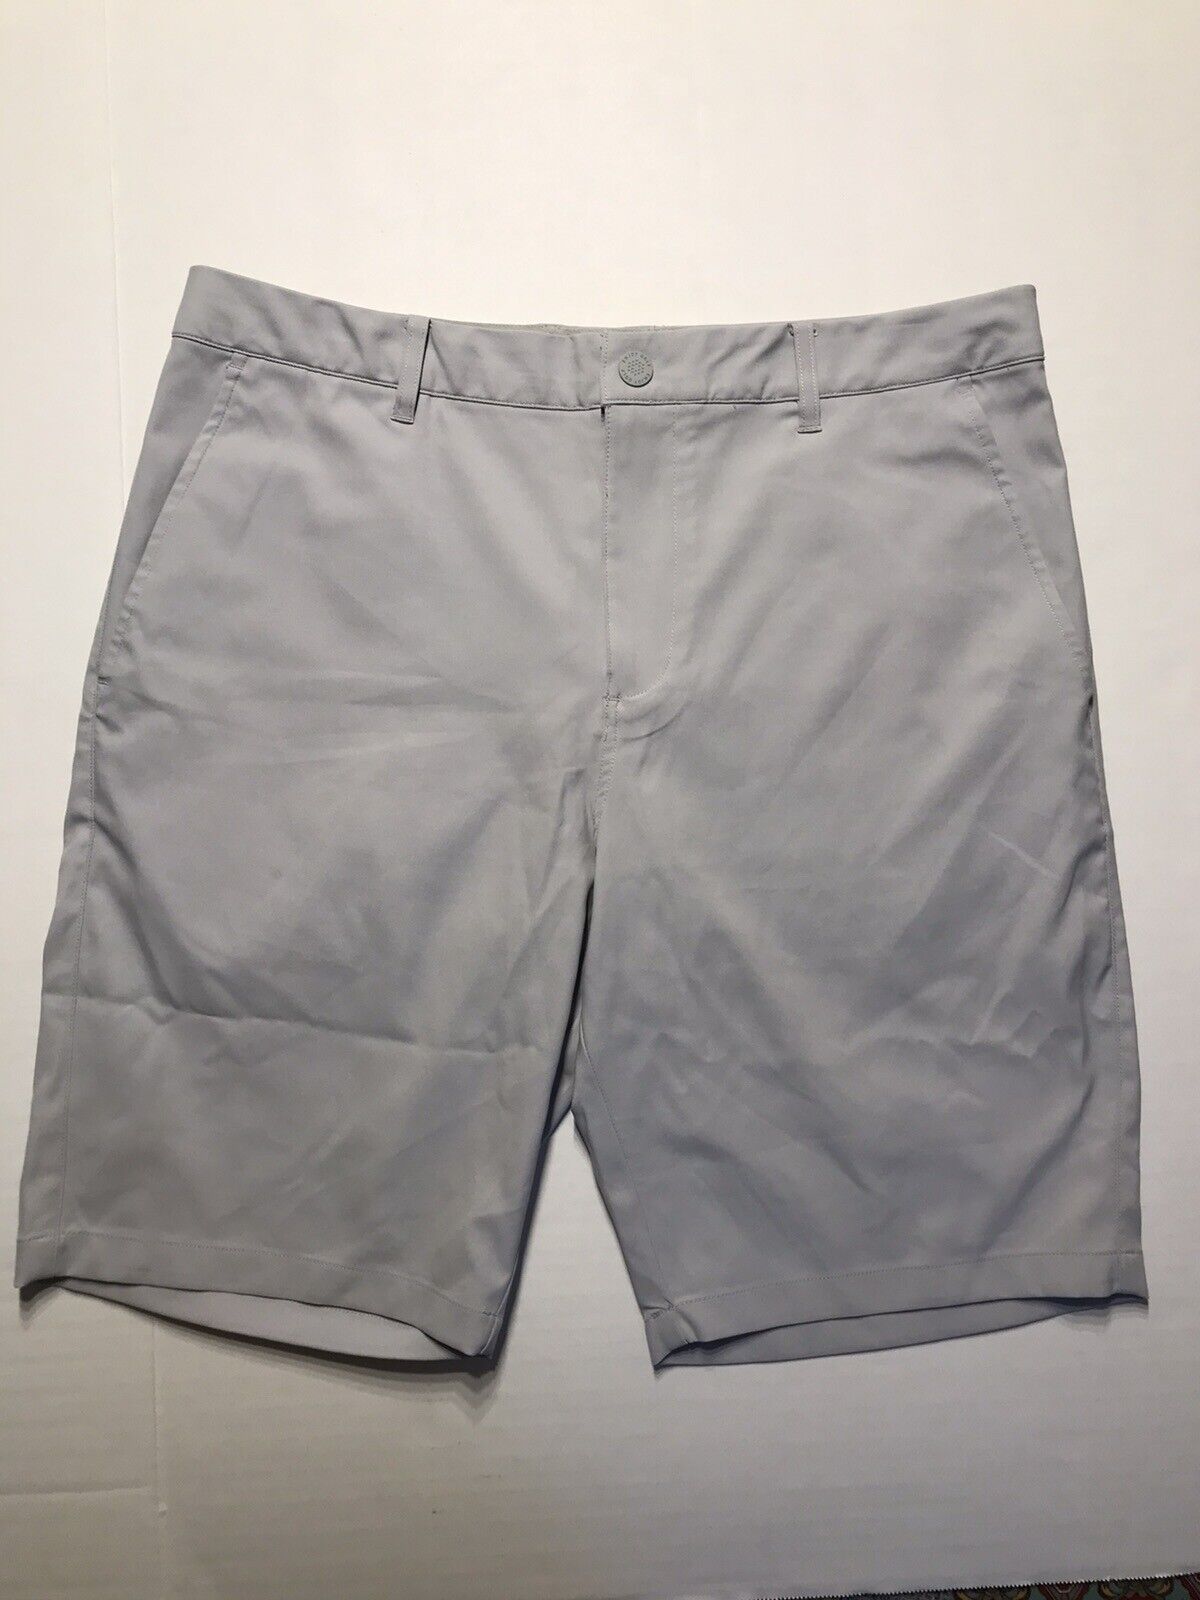 Men’s Puma Golf Dry Cell Light Gray Quick Dry Golf Shorts Size 34 10”